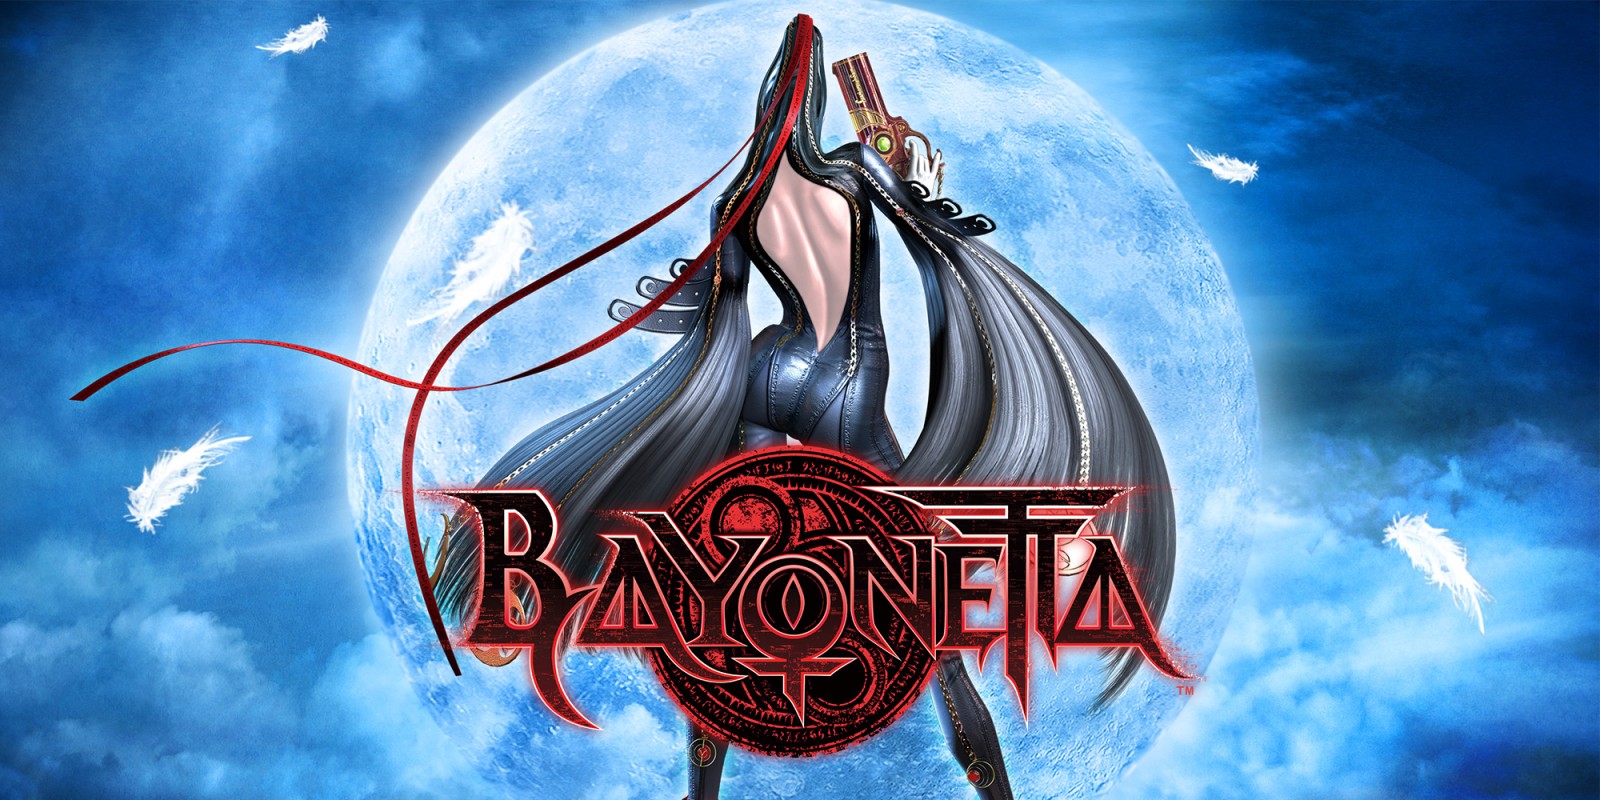 download bayonetta 2 metacritic for free